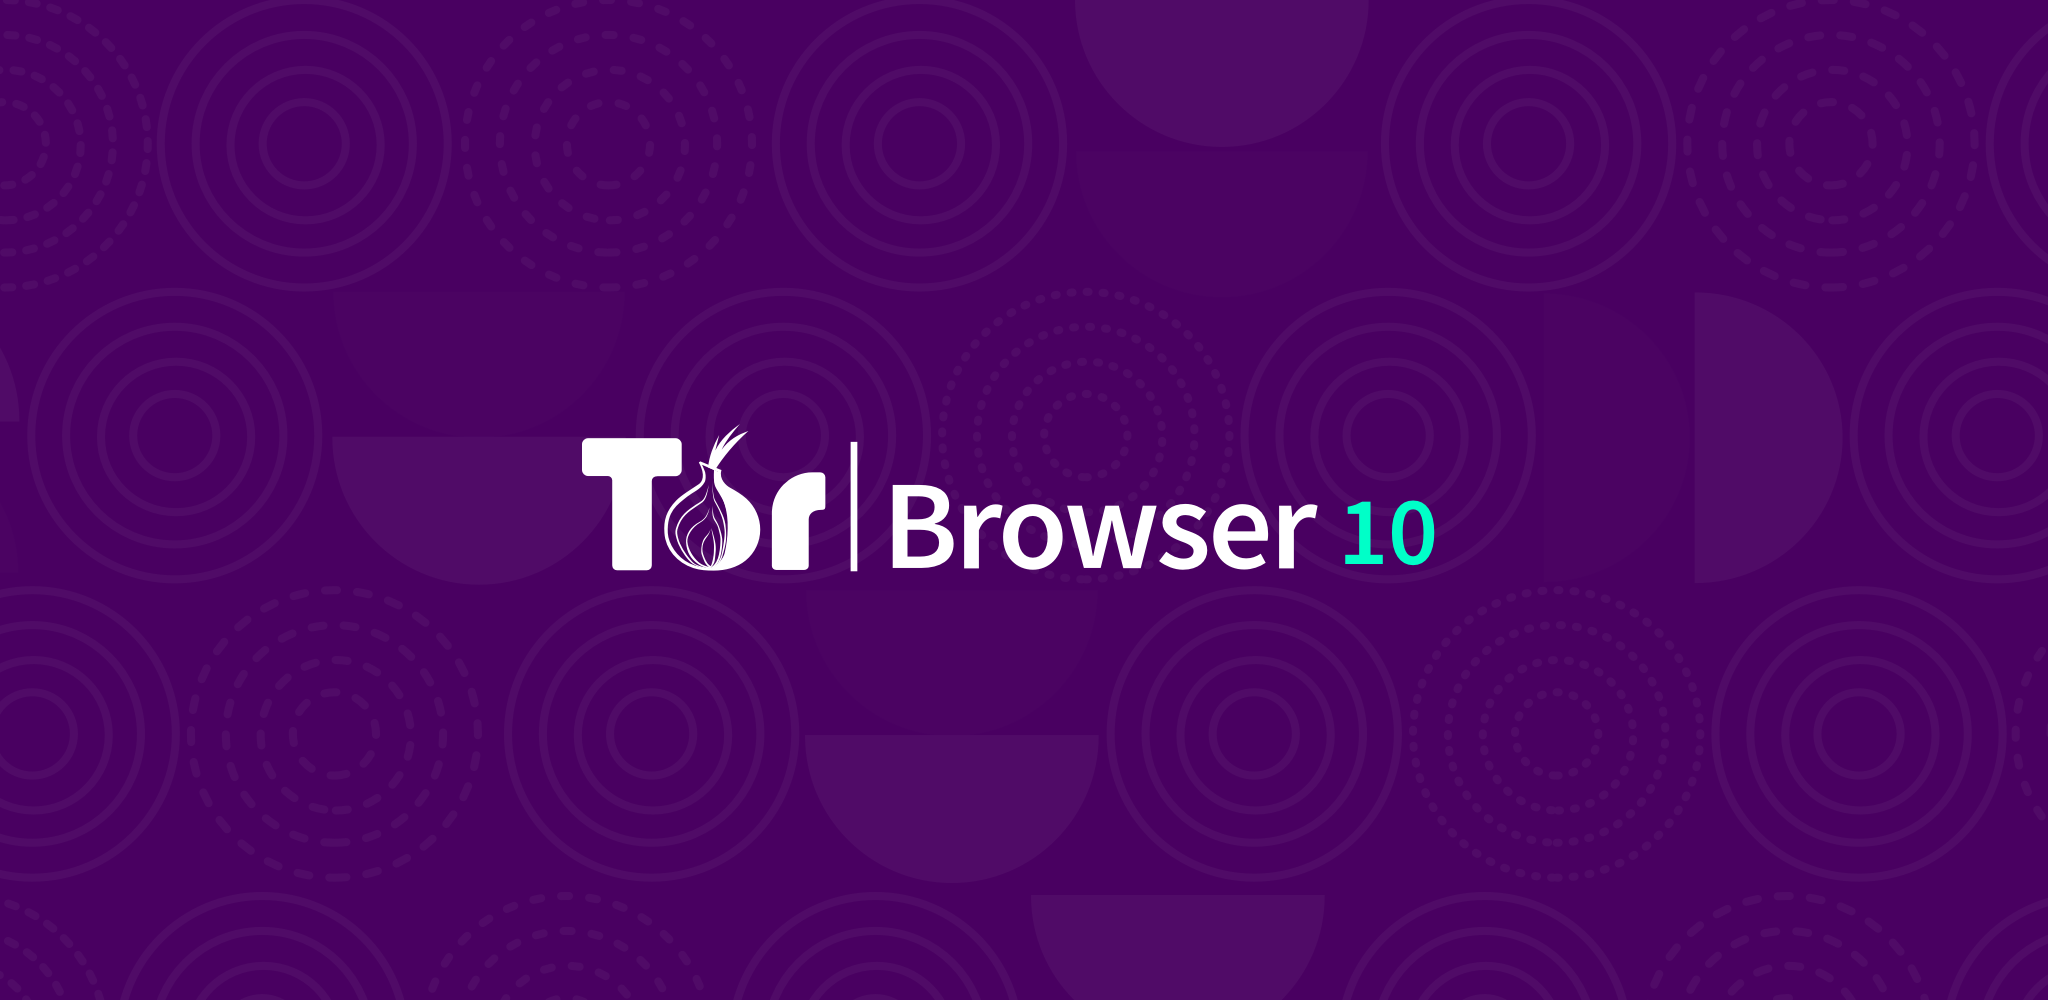 Tor browser firefox exe hudra защищает ли tor browser